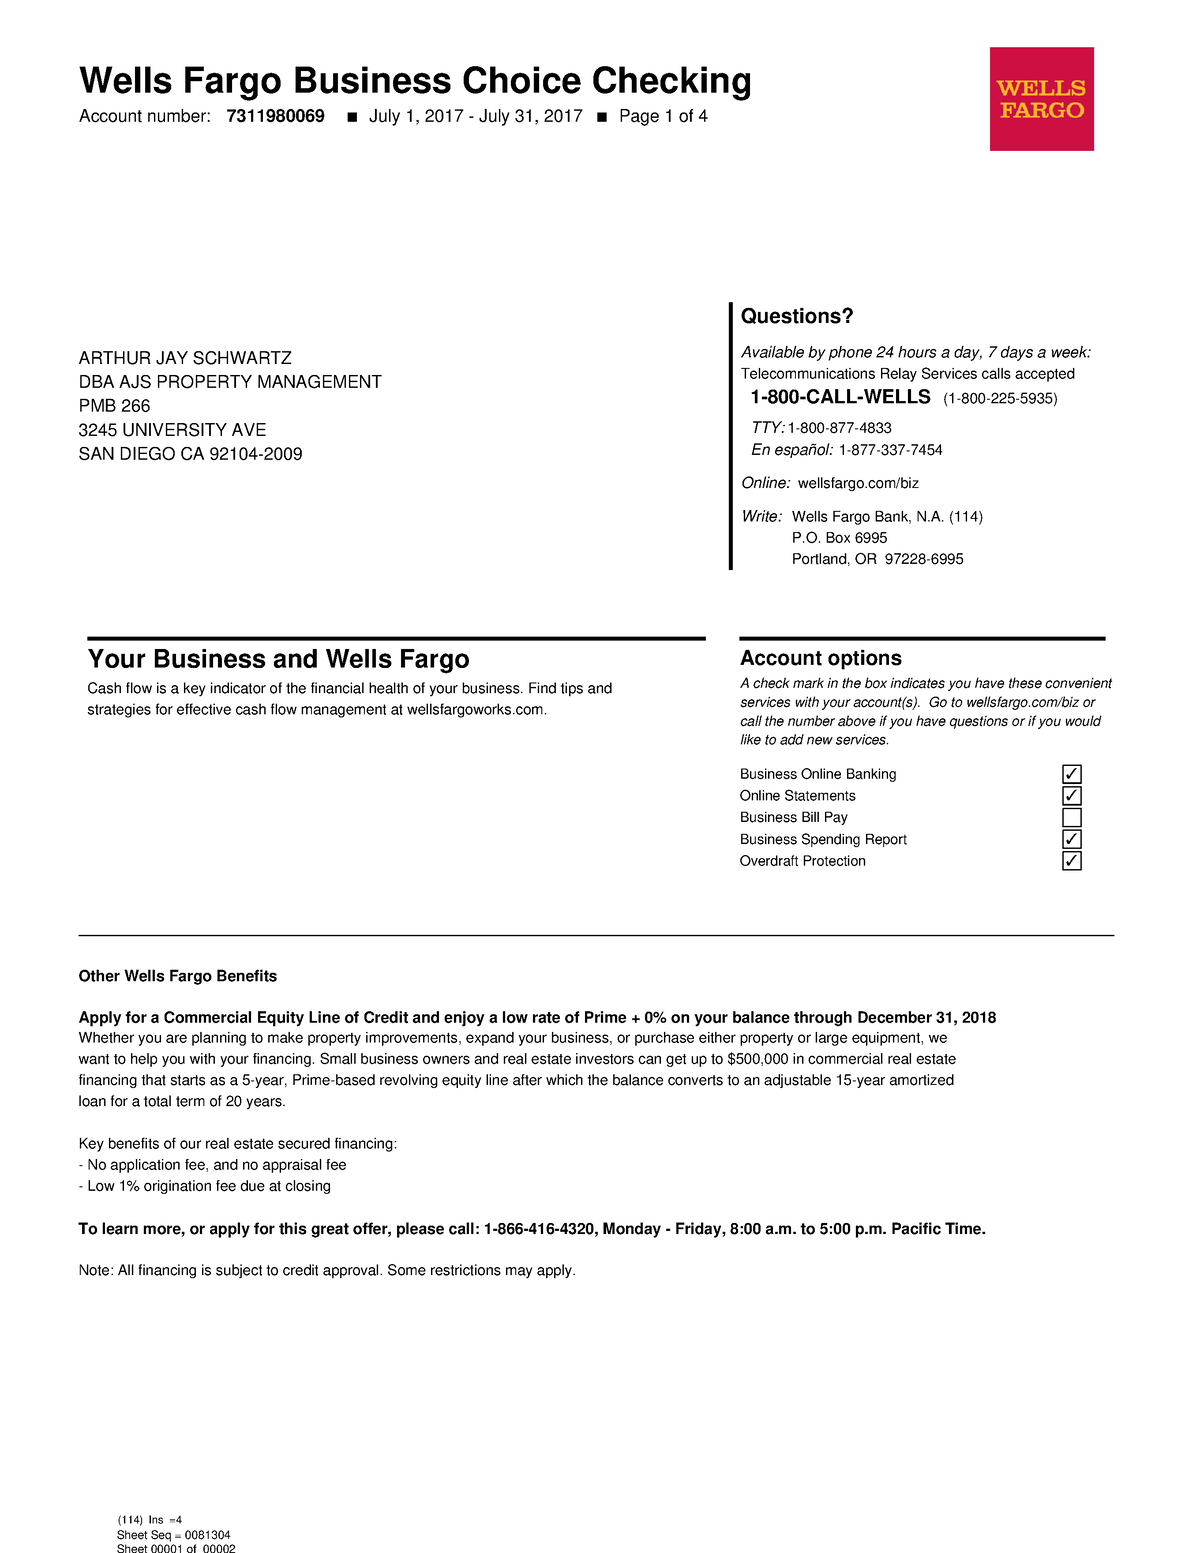 Wells fargo bank statement pdf2 (114) Ins = 4 Wells Fargo Business